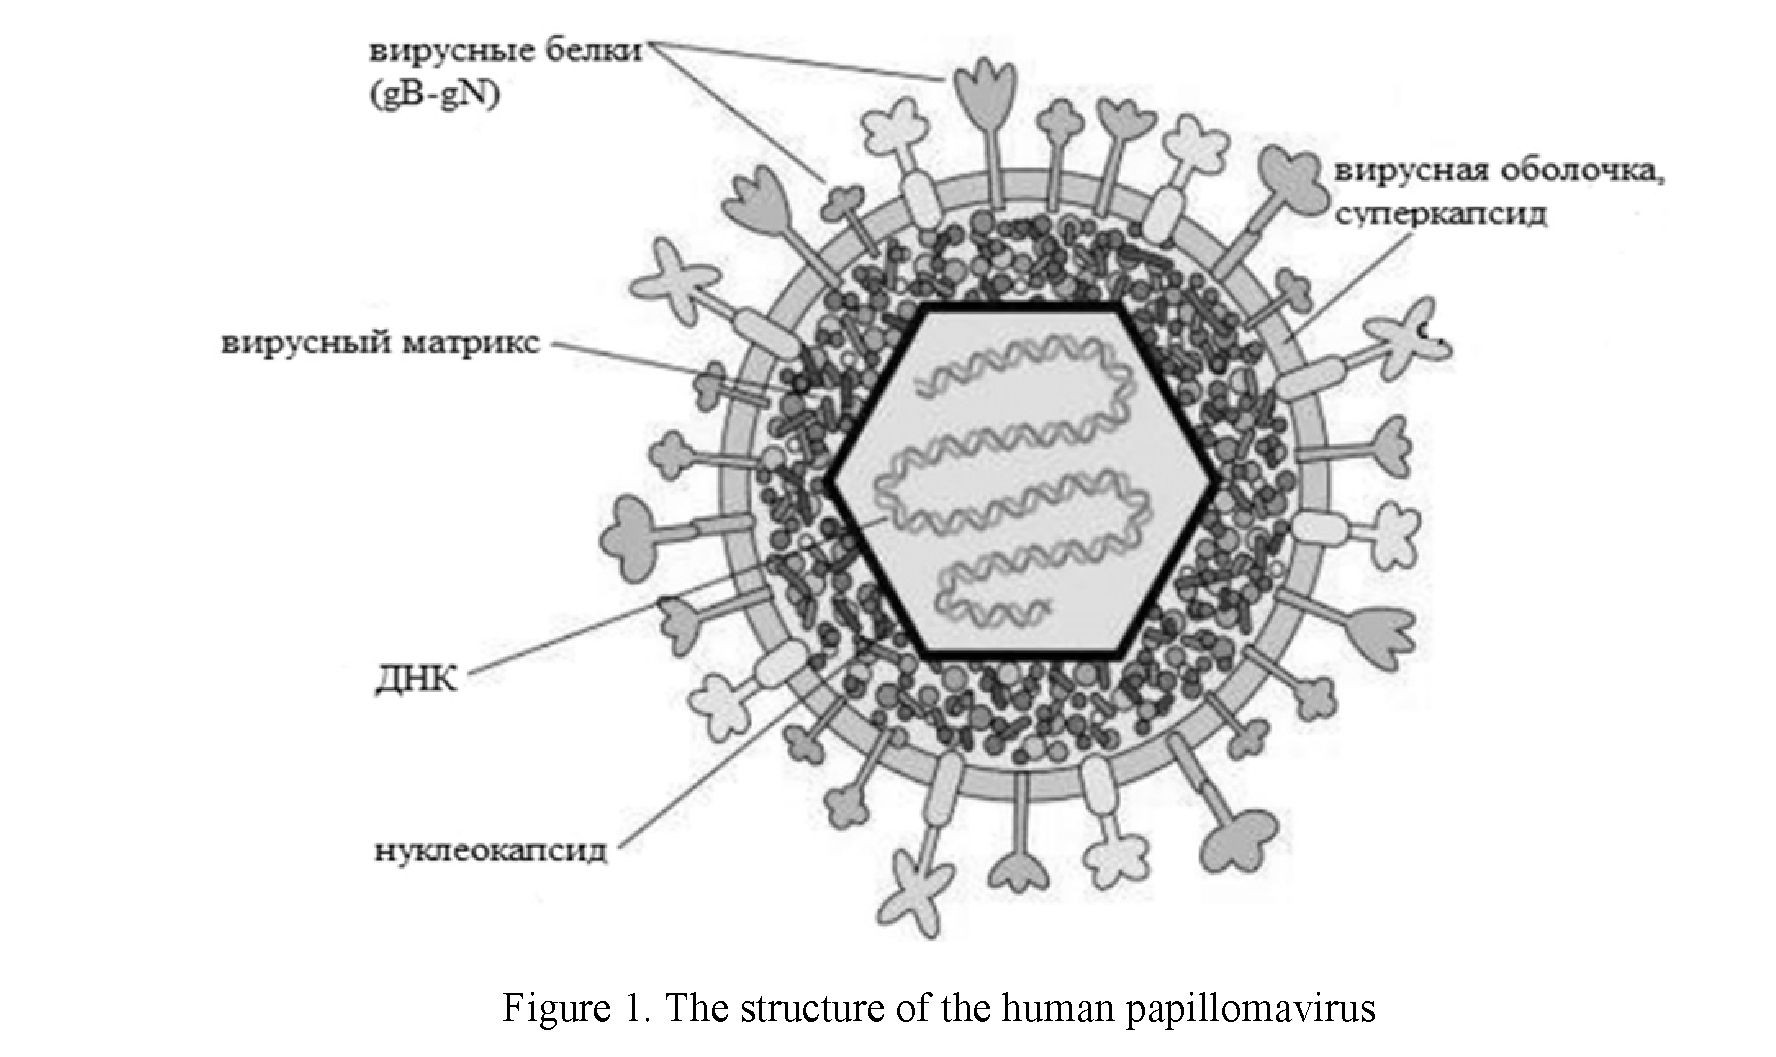 Genetic condition of human papillomavirus high carcinogenic risk